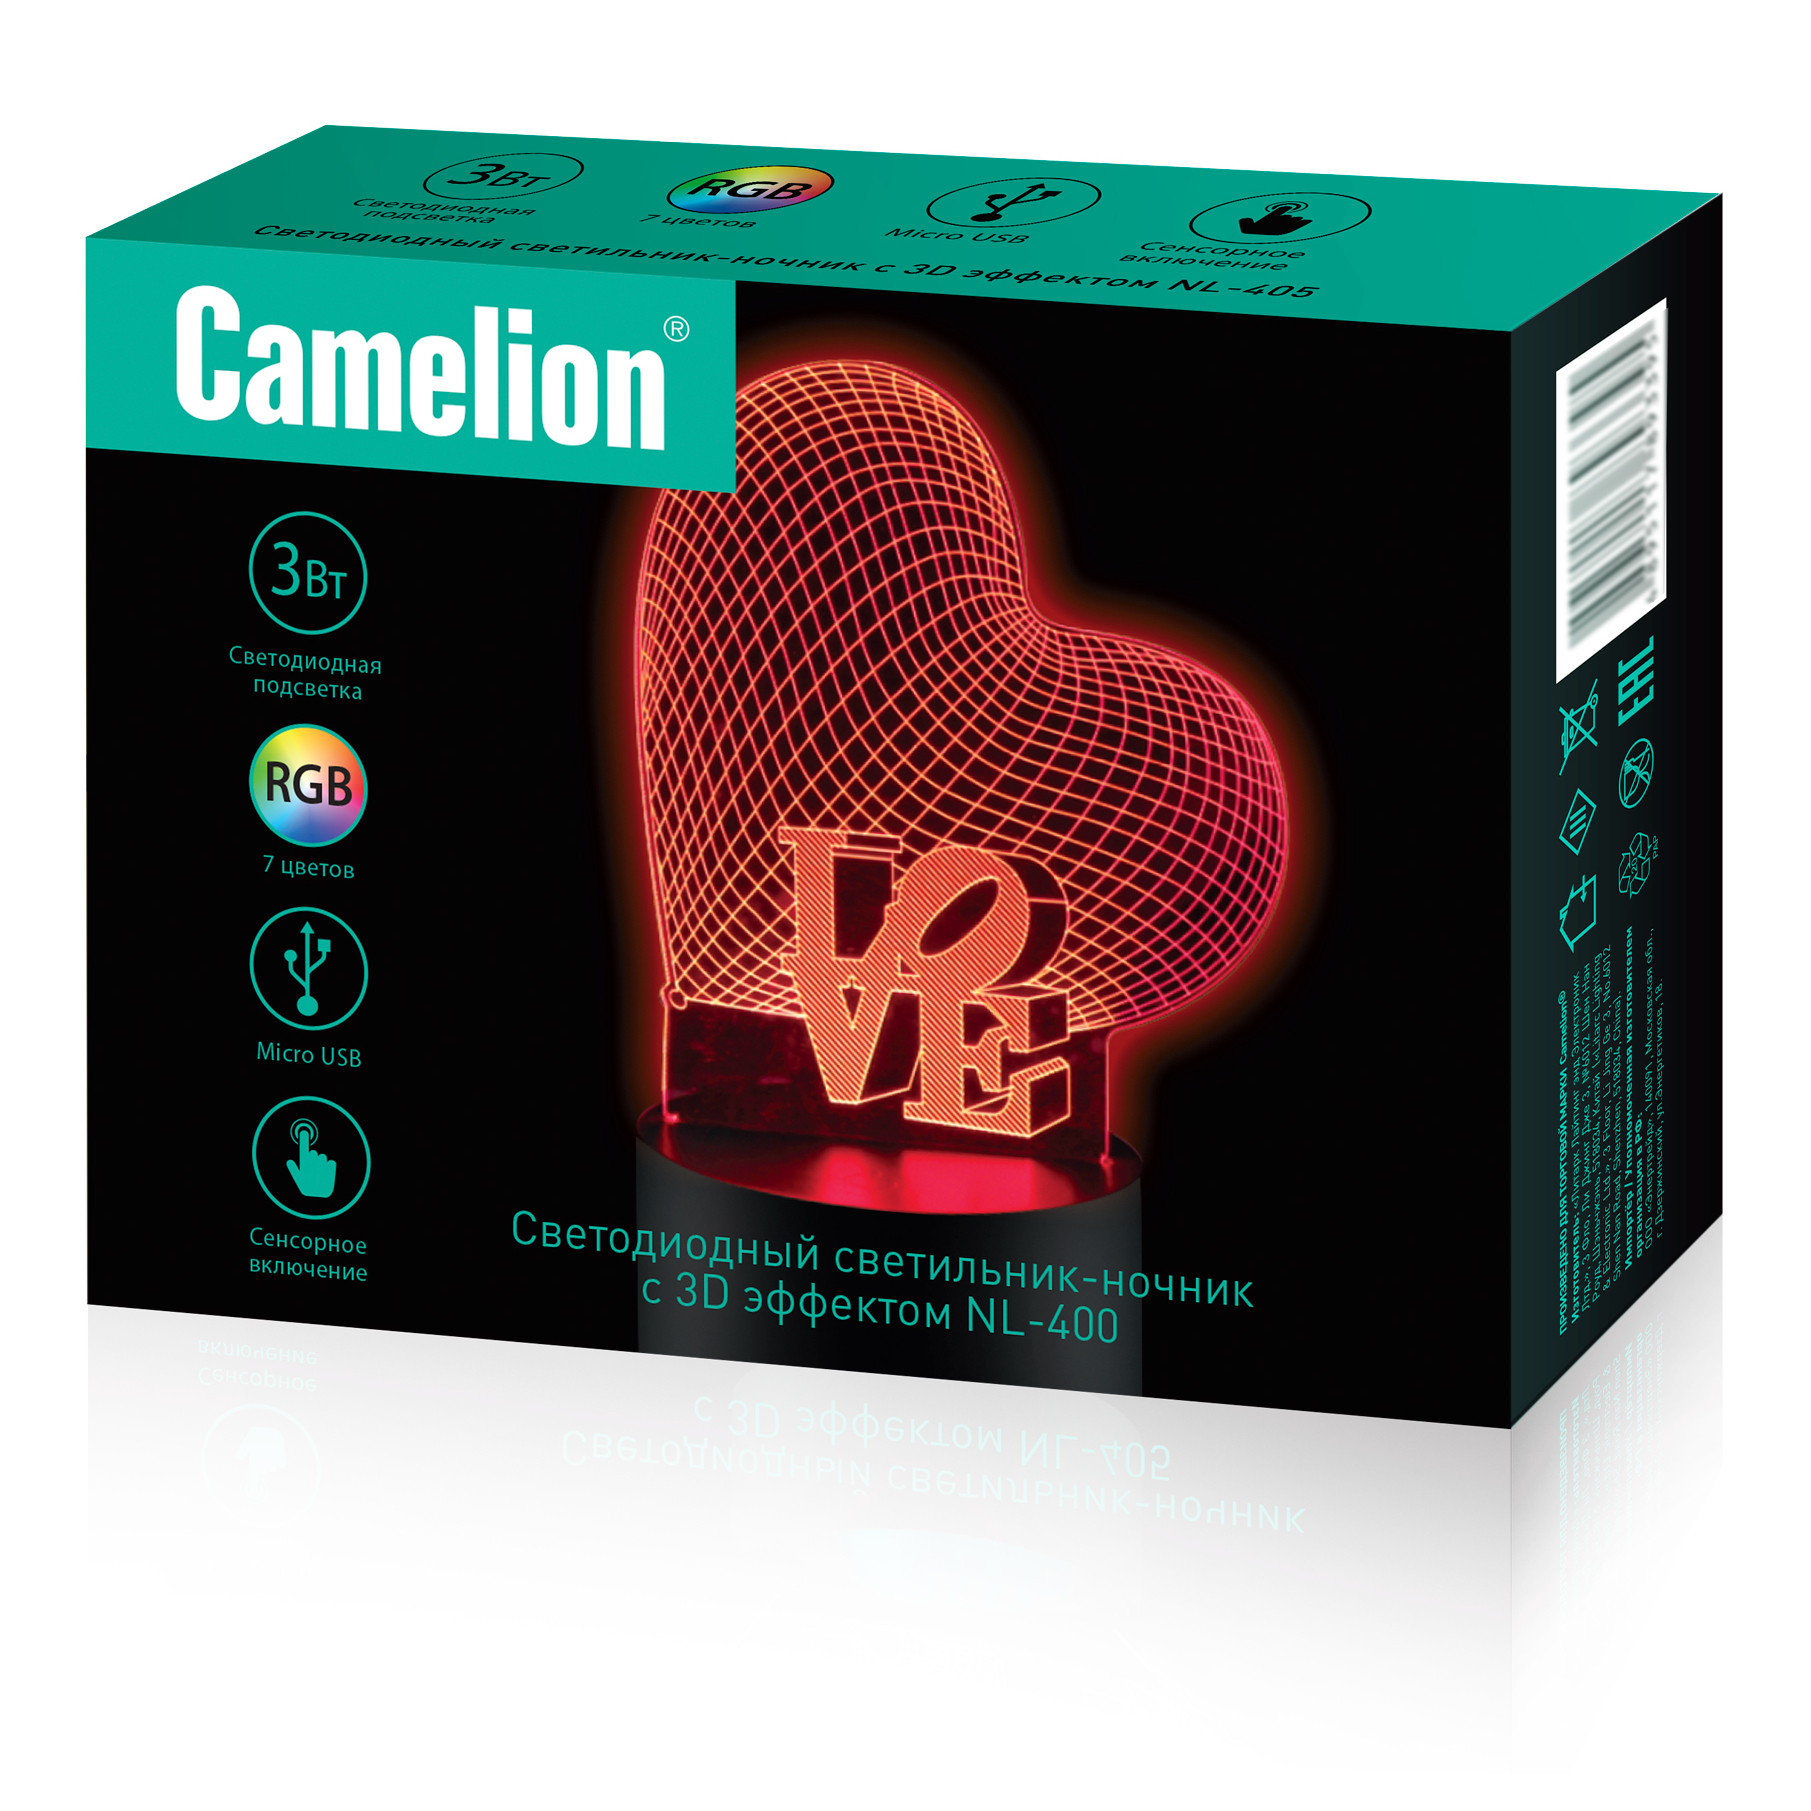 Camelion NL-400 (Led наст. свет-к, 3Вт, RGB, USB)